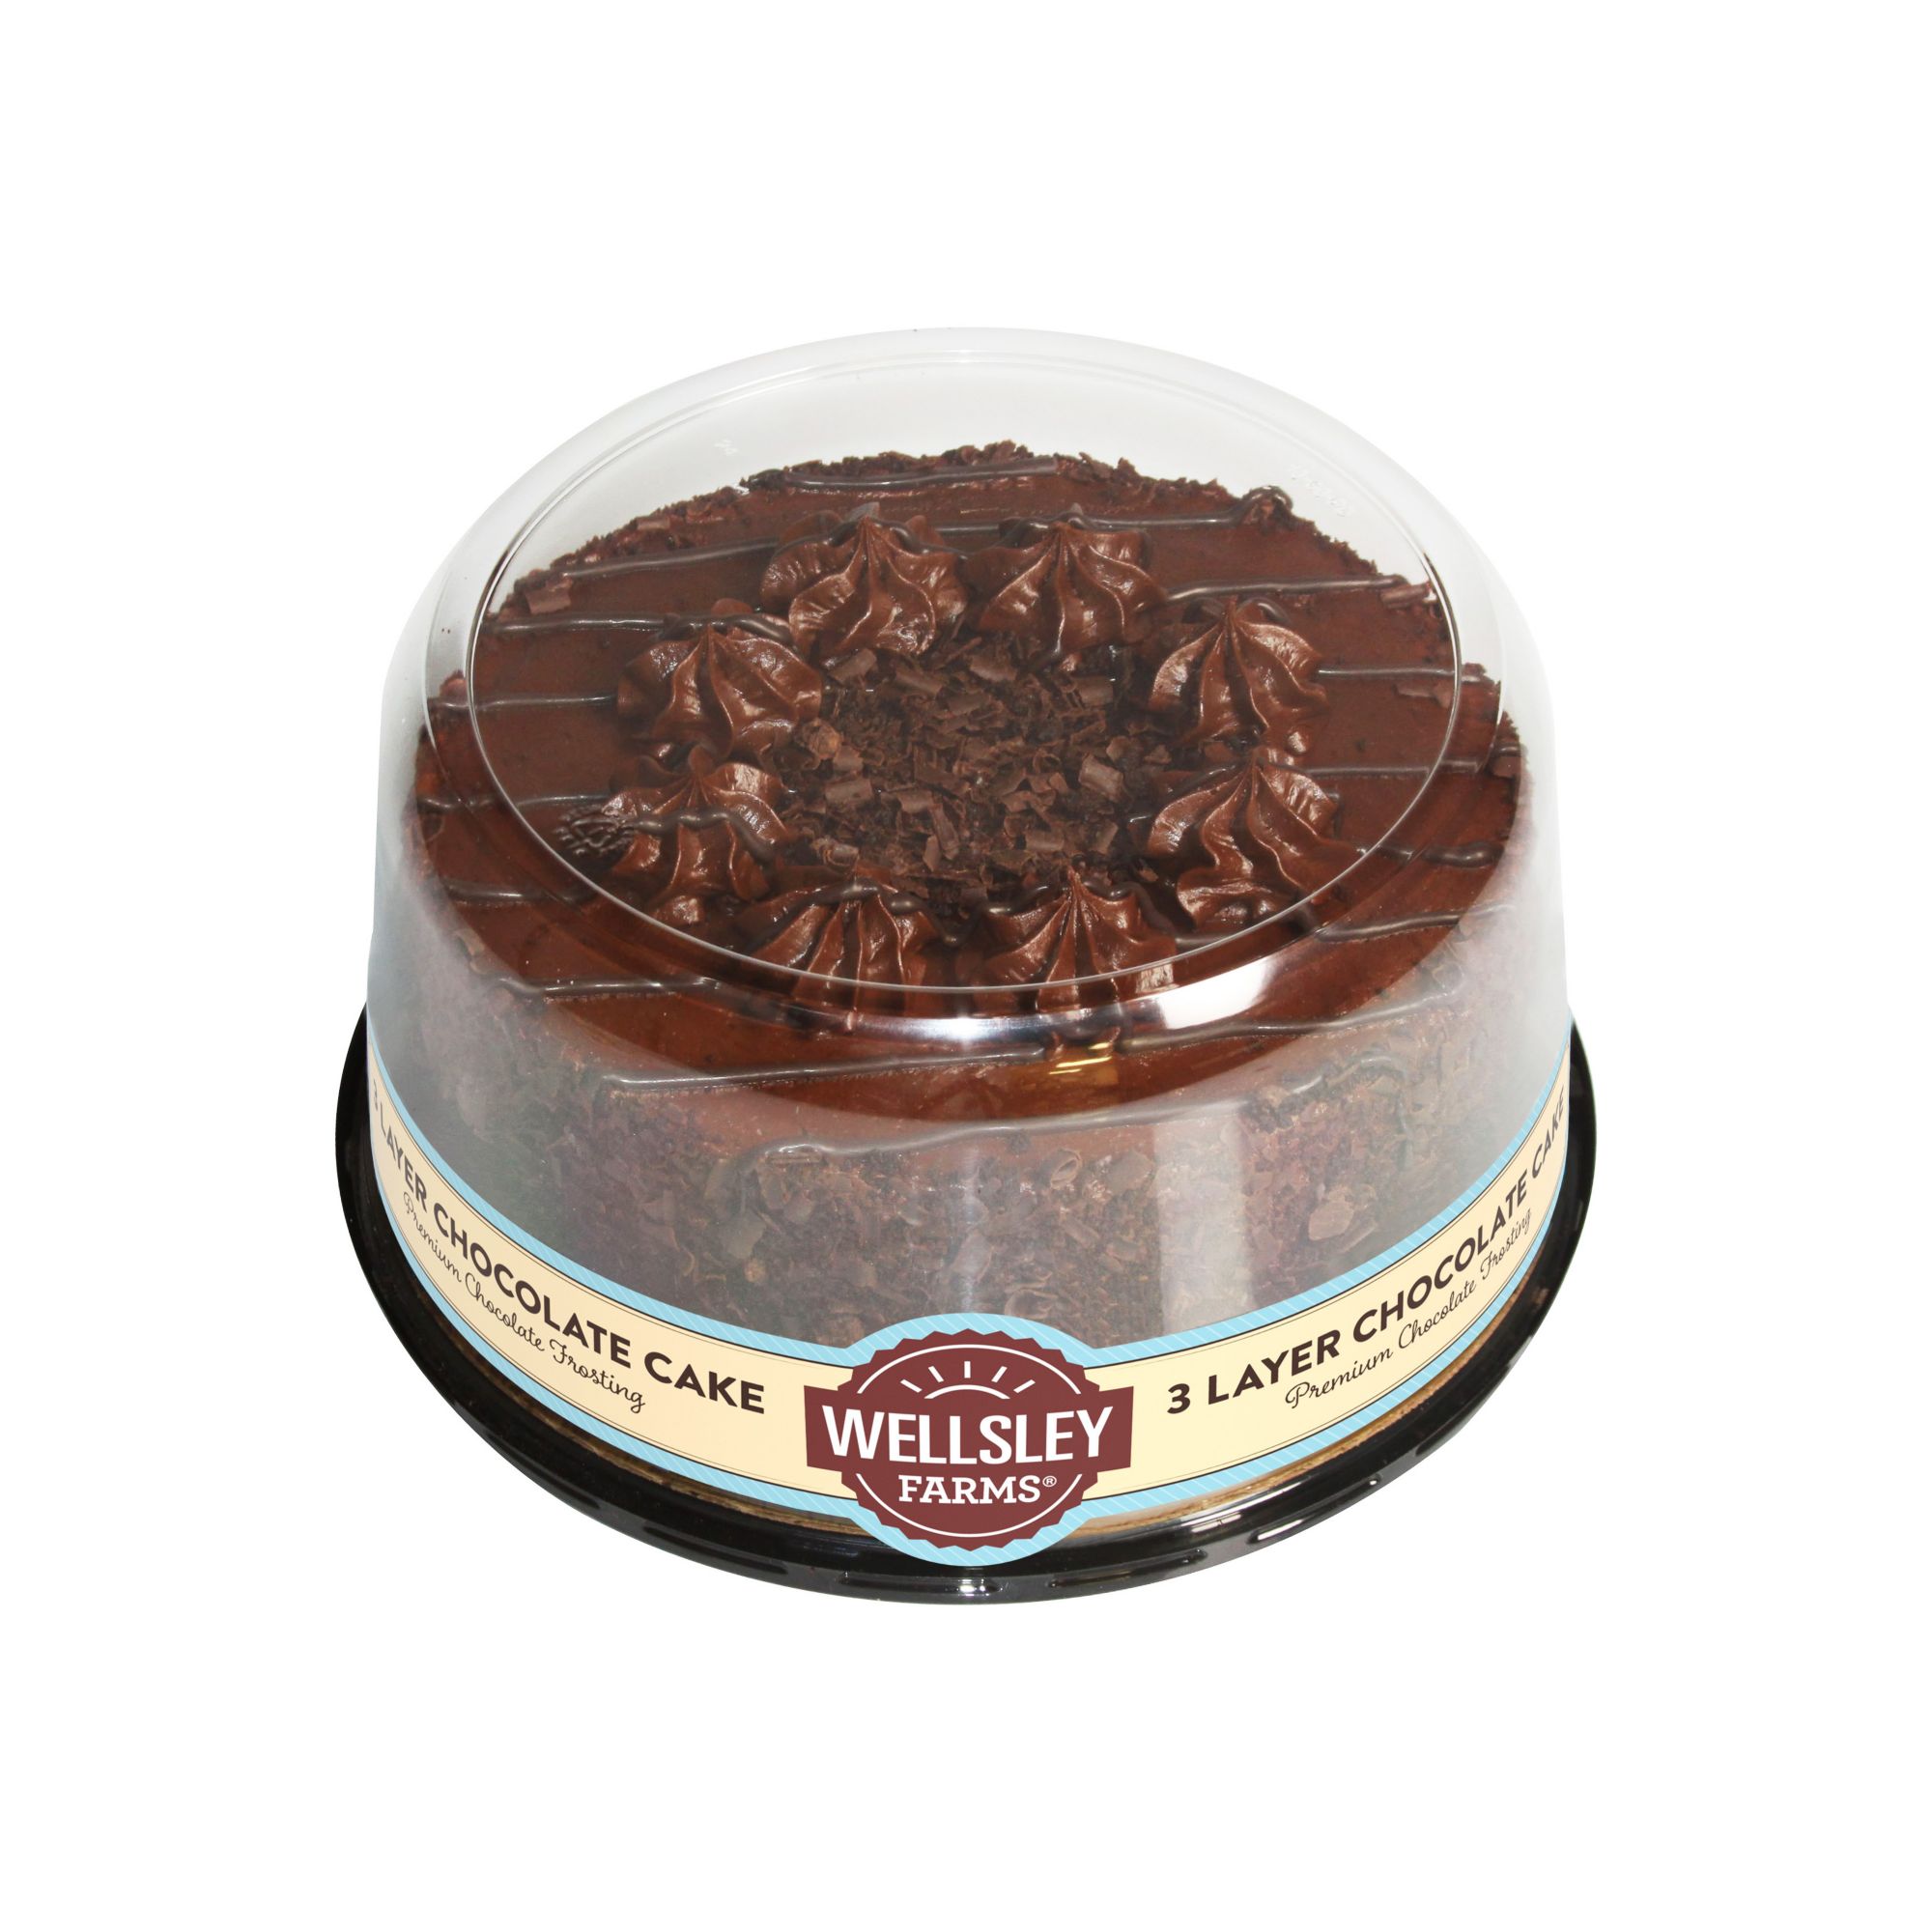 Wellsley Farms 3 Layer Chocolate Cake, 49 oz. | BJ's Wholesale Club